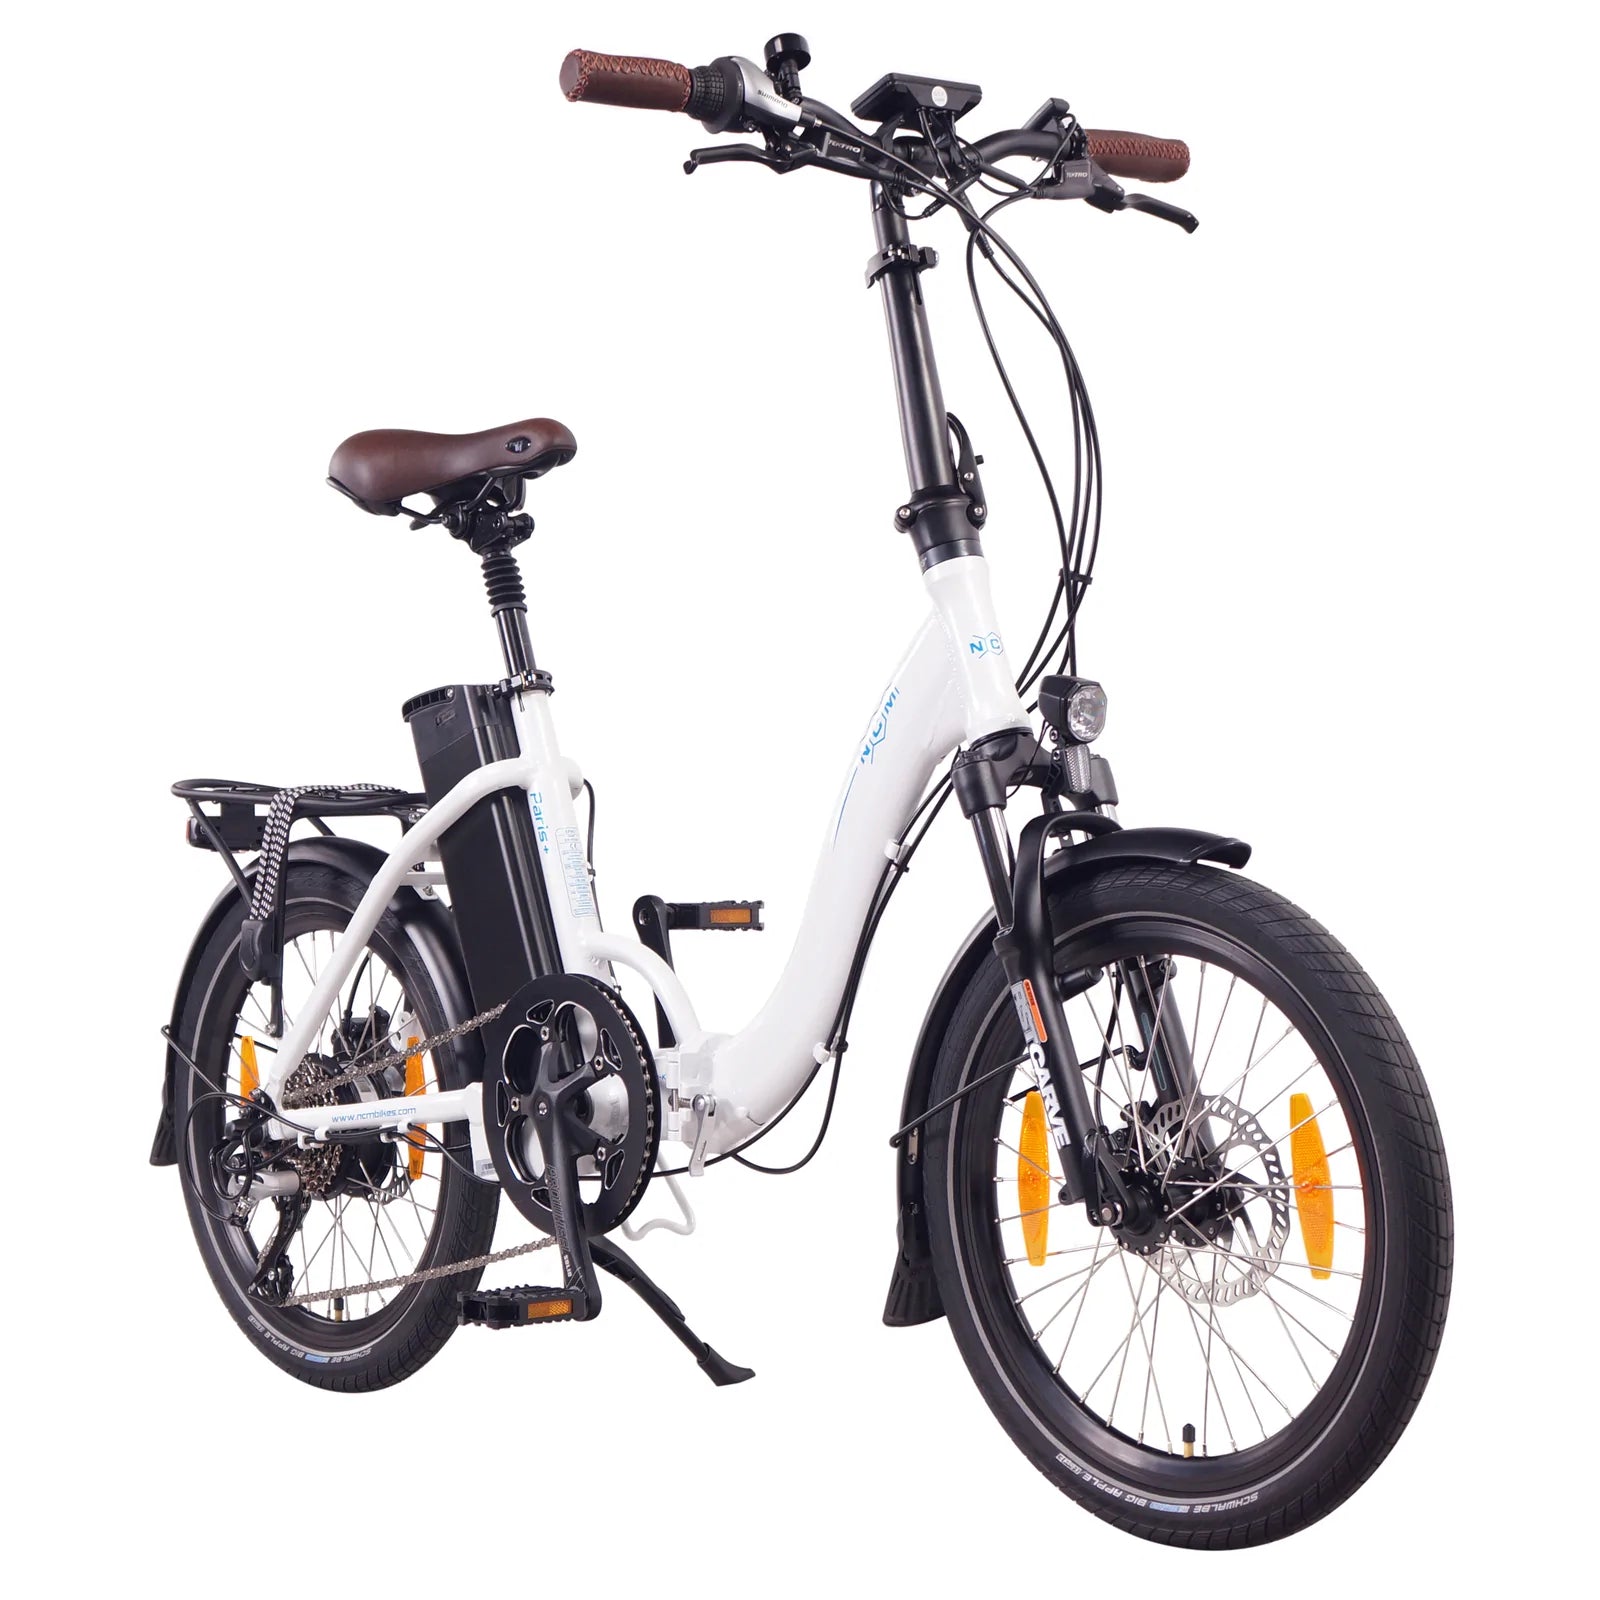 NCM Paris+ Folding E-Bike, 250W, 36V 19Ah 684Wh Battery, Size 20 | Leon Cycle Ebikes